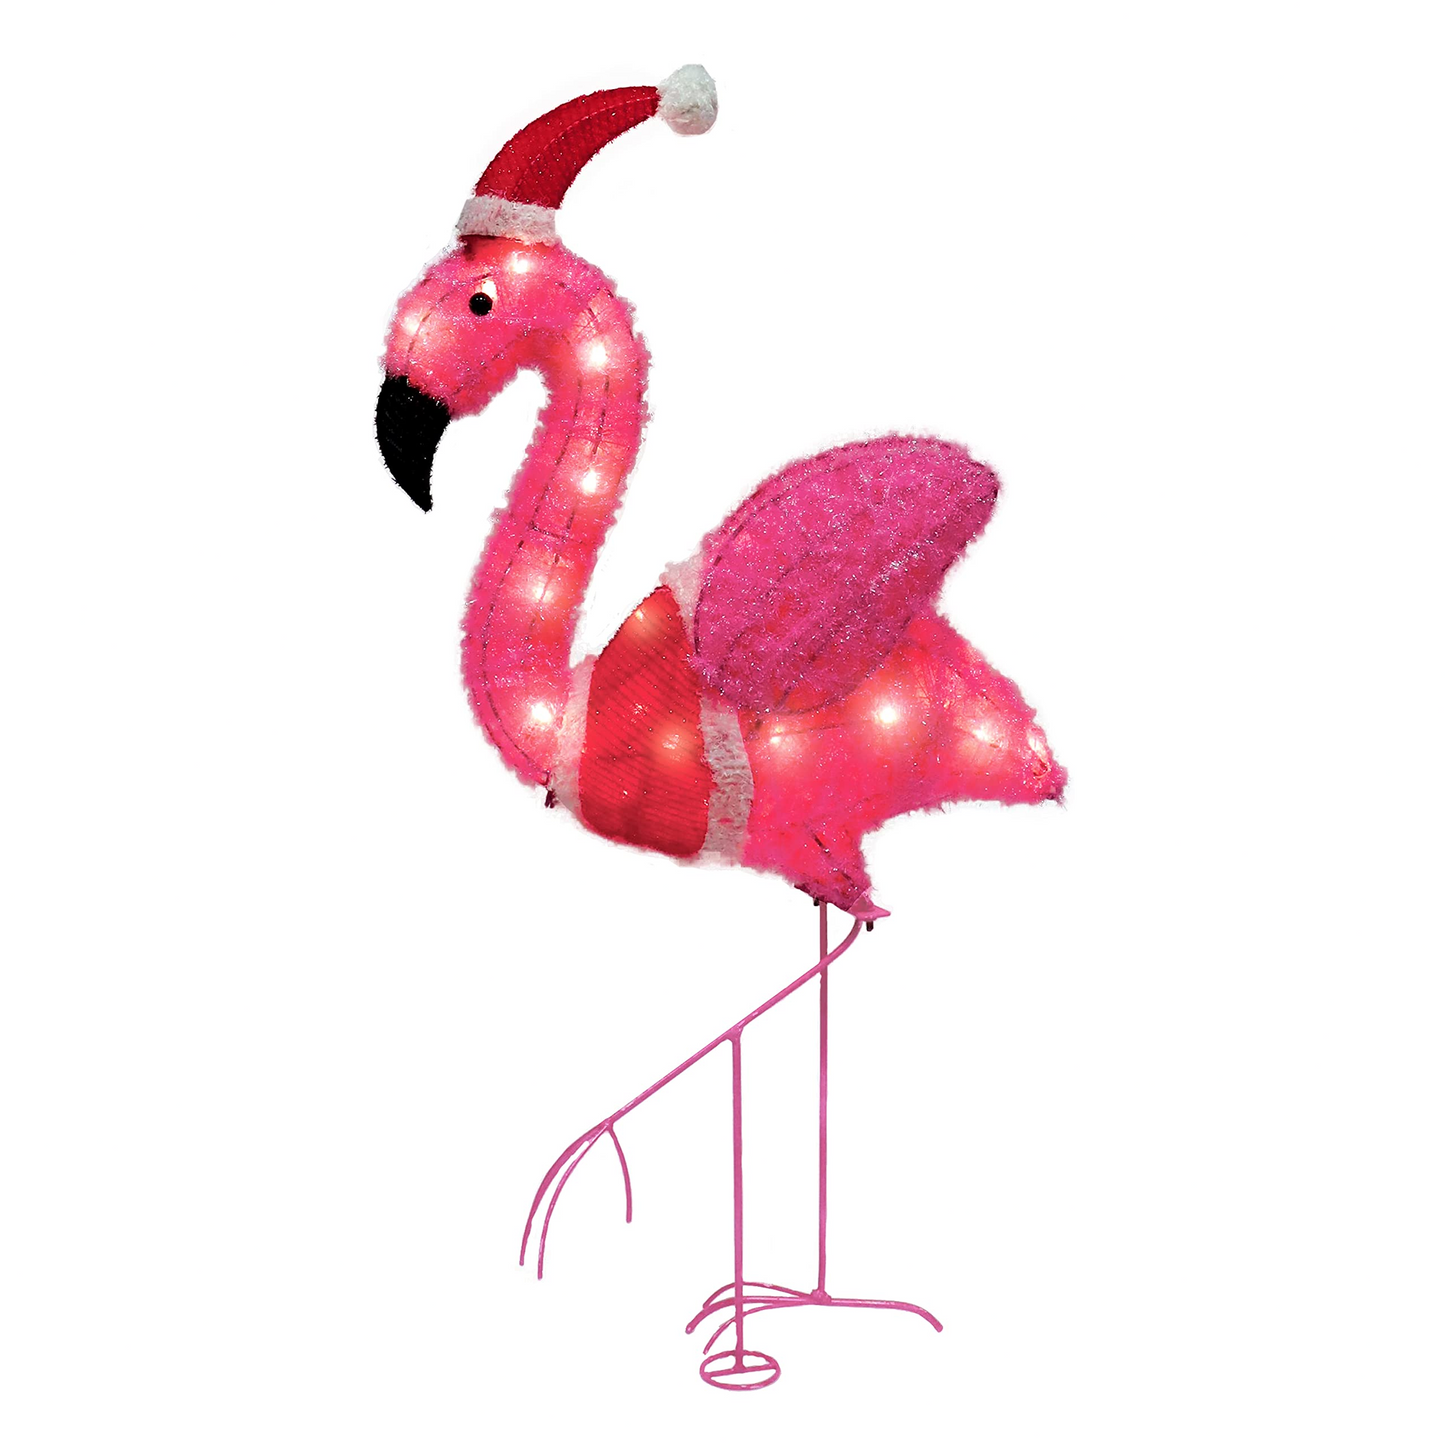 3ft LED Yard Lights - Tinsel Flamingo with Christmas Hat